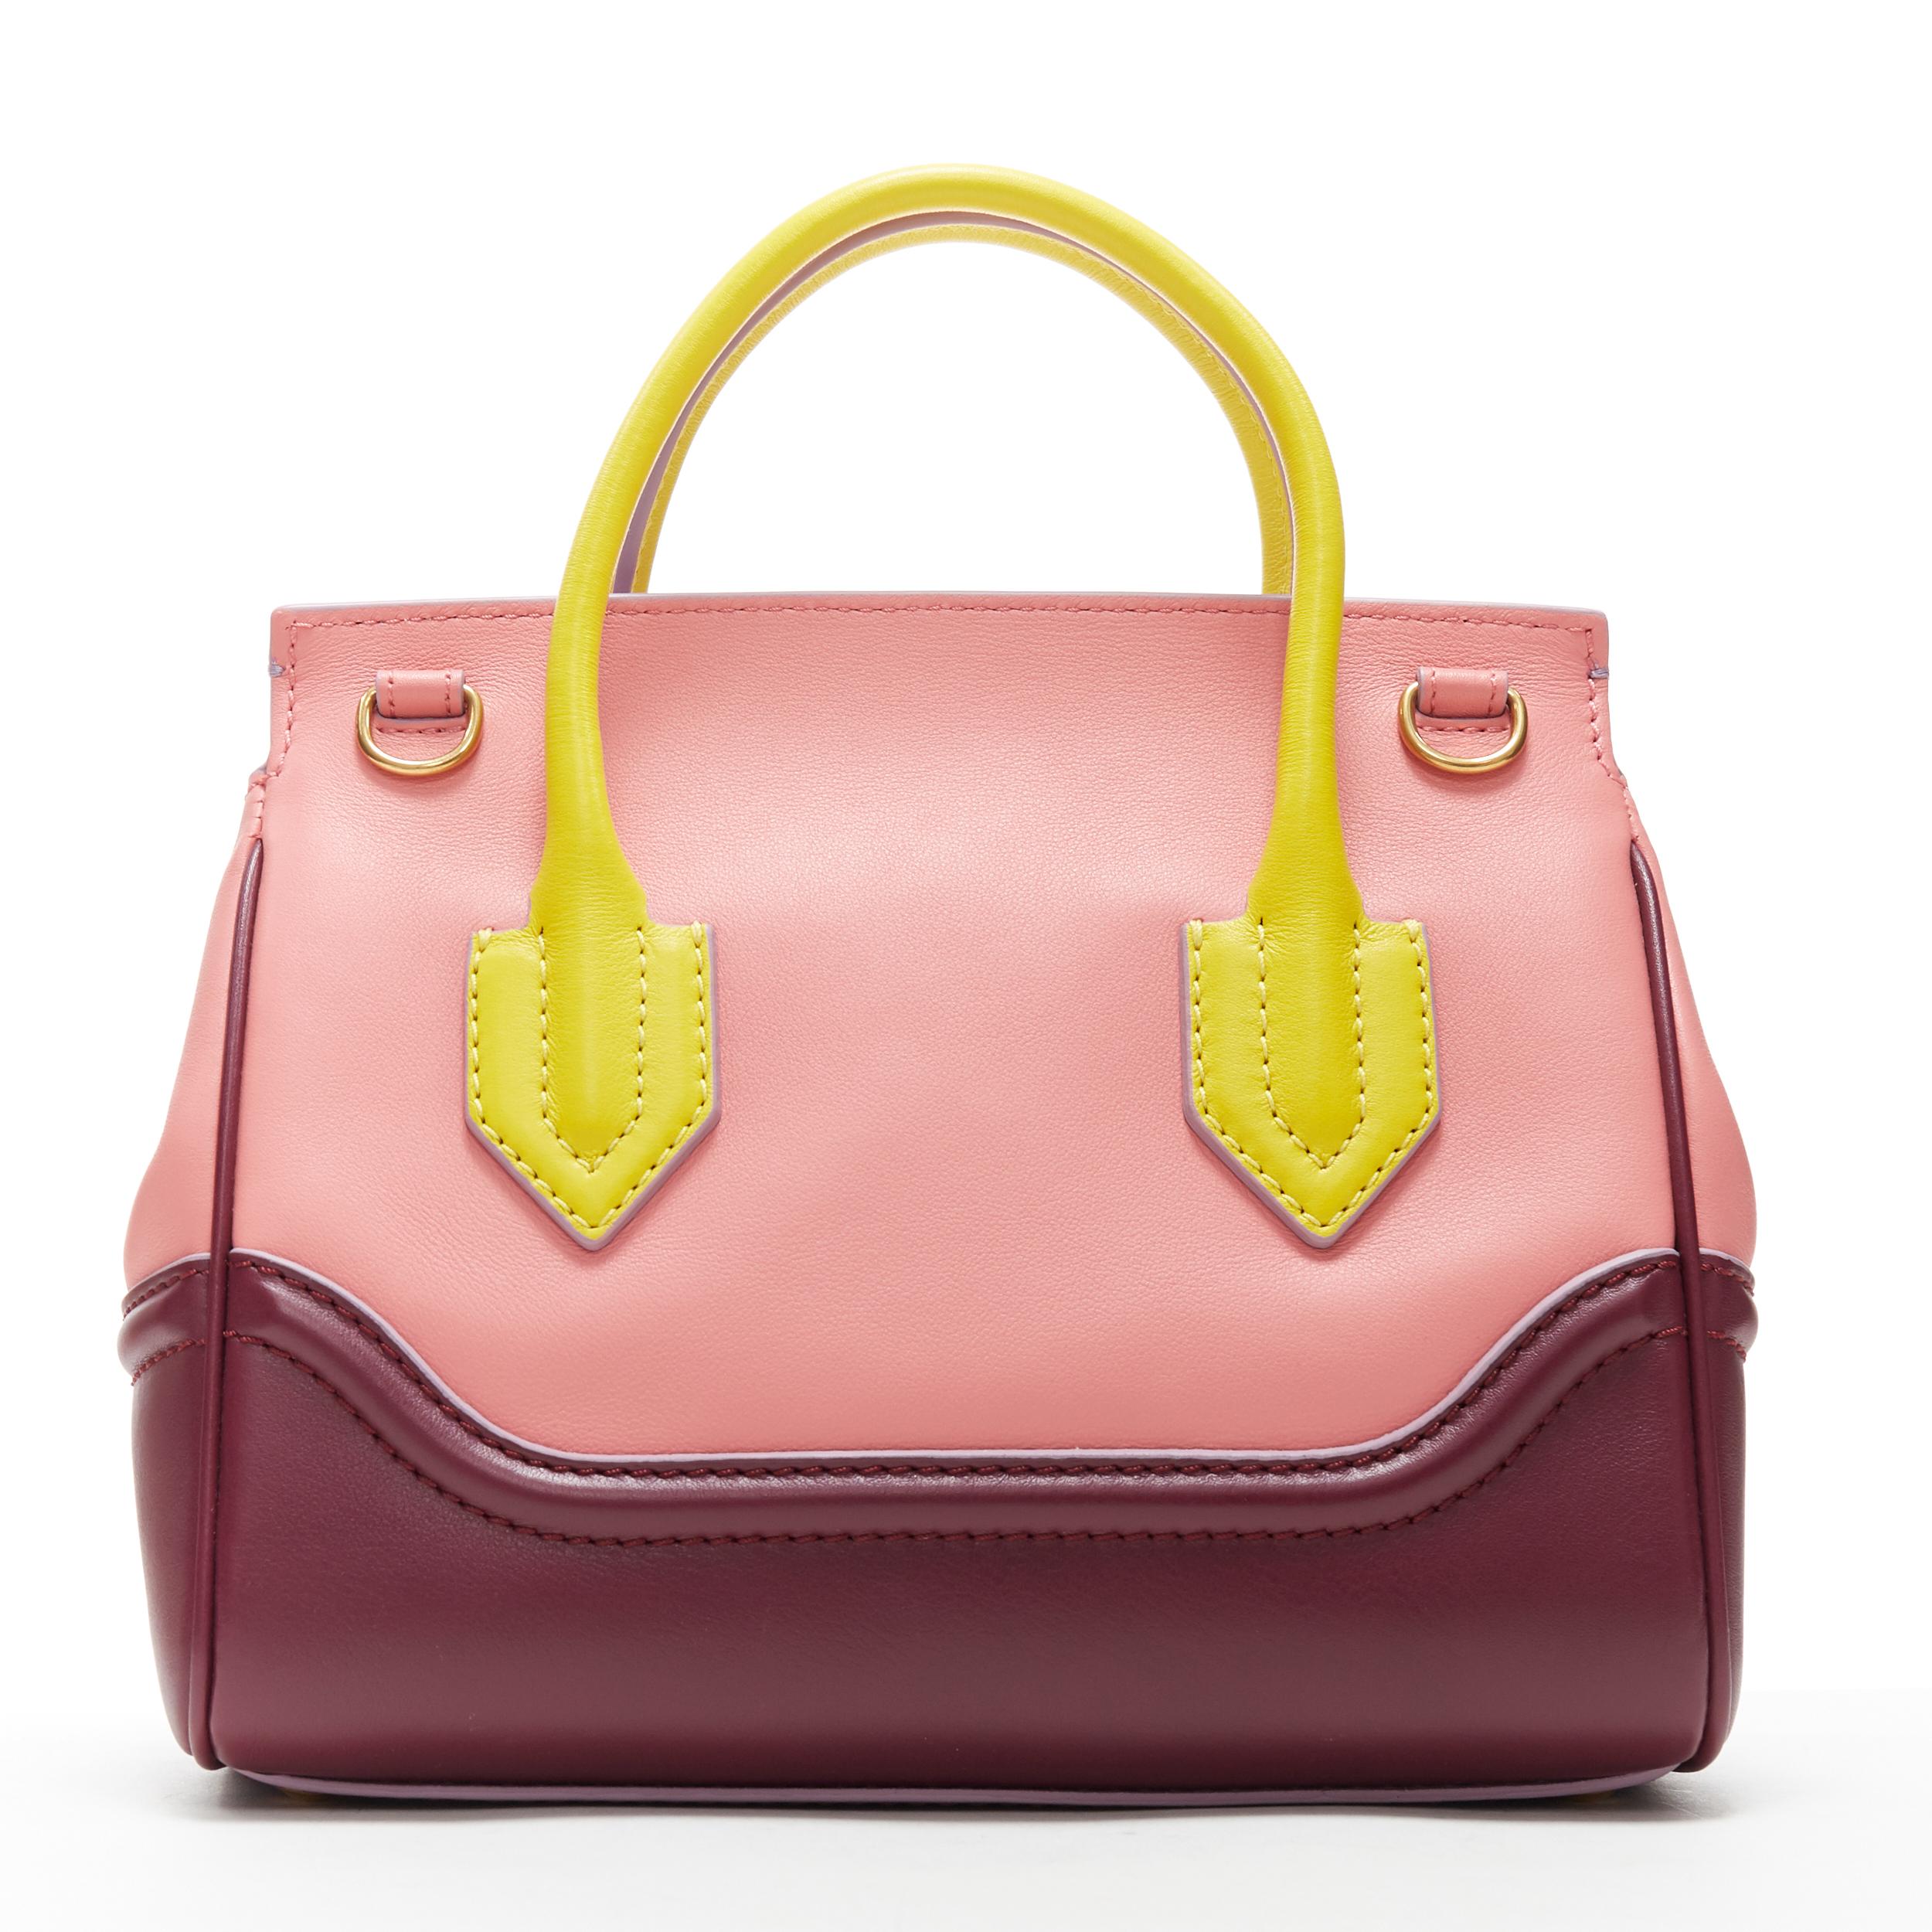 Beige new VERSACE Palazzo Empire Medusa Small pink lilac tri-color flap shoulder bag